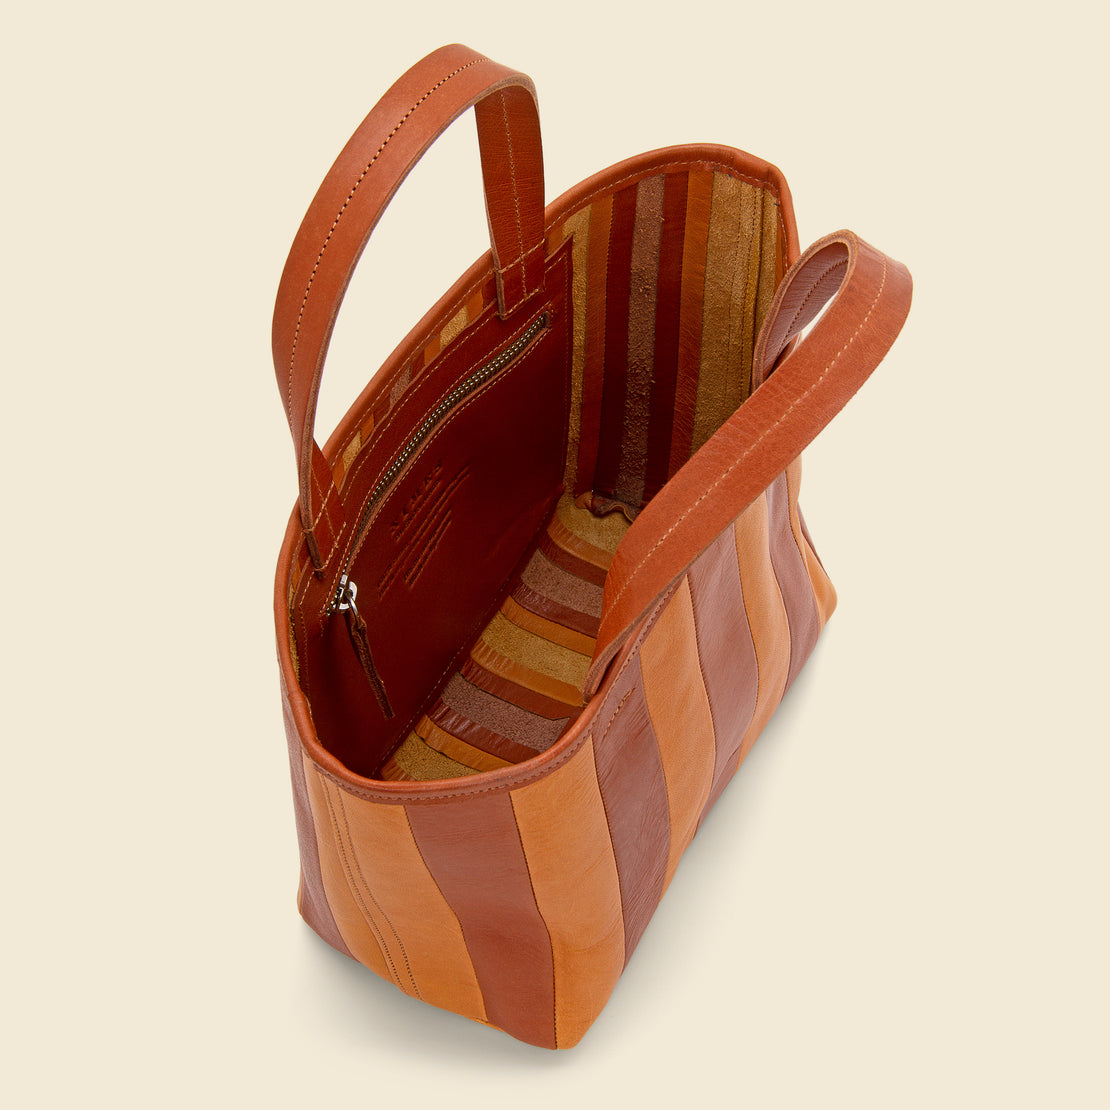 Gorriti Striped Leather Hand Bag - Caramel/Tobacco - Nimes - STAG Provisions - W - Accessories - Bag